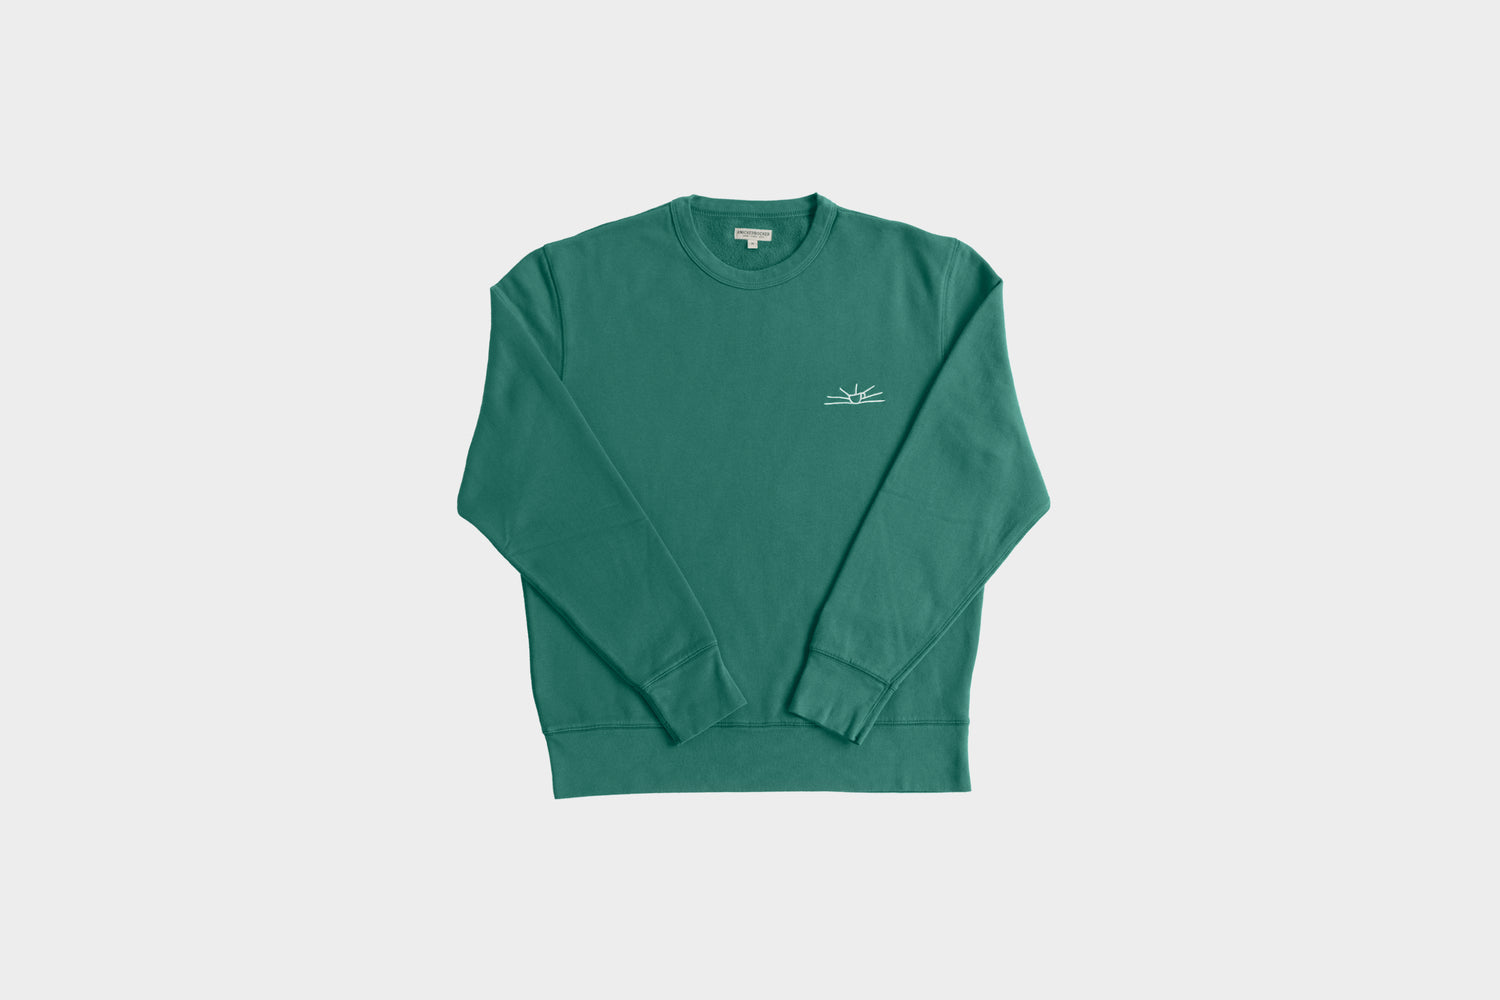 Terra Kaffe | A dark green sweater with a small sunshine design in the top right corner